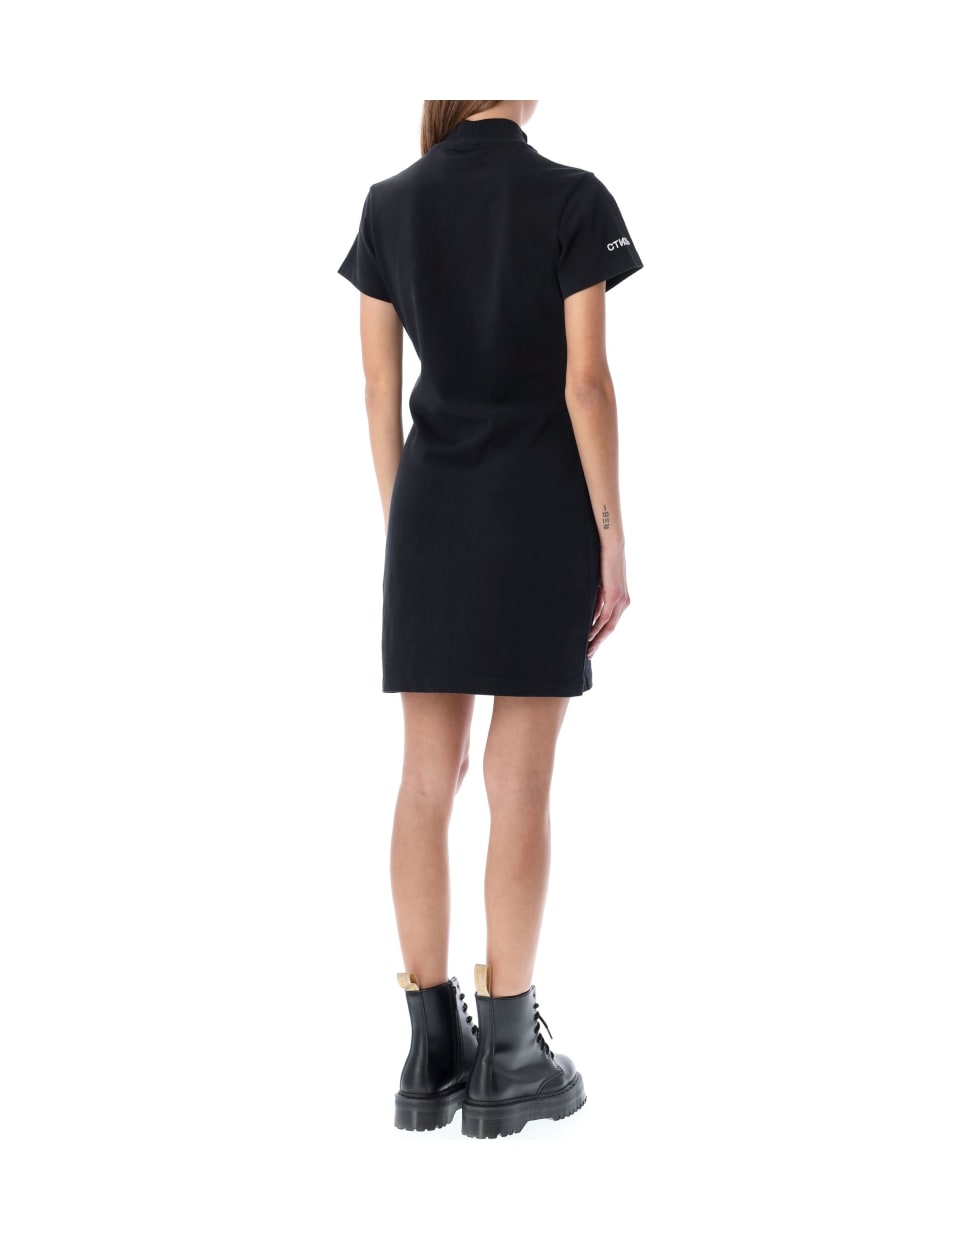 HERON PRESTON Ctnmb S/s Turtleneck Dress - BLACK